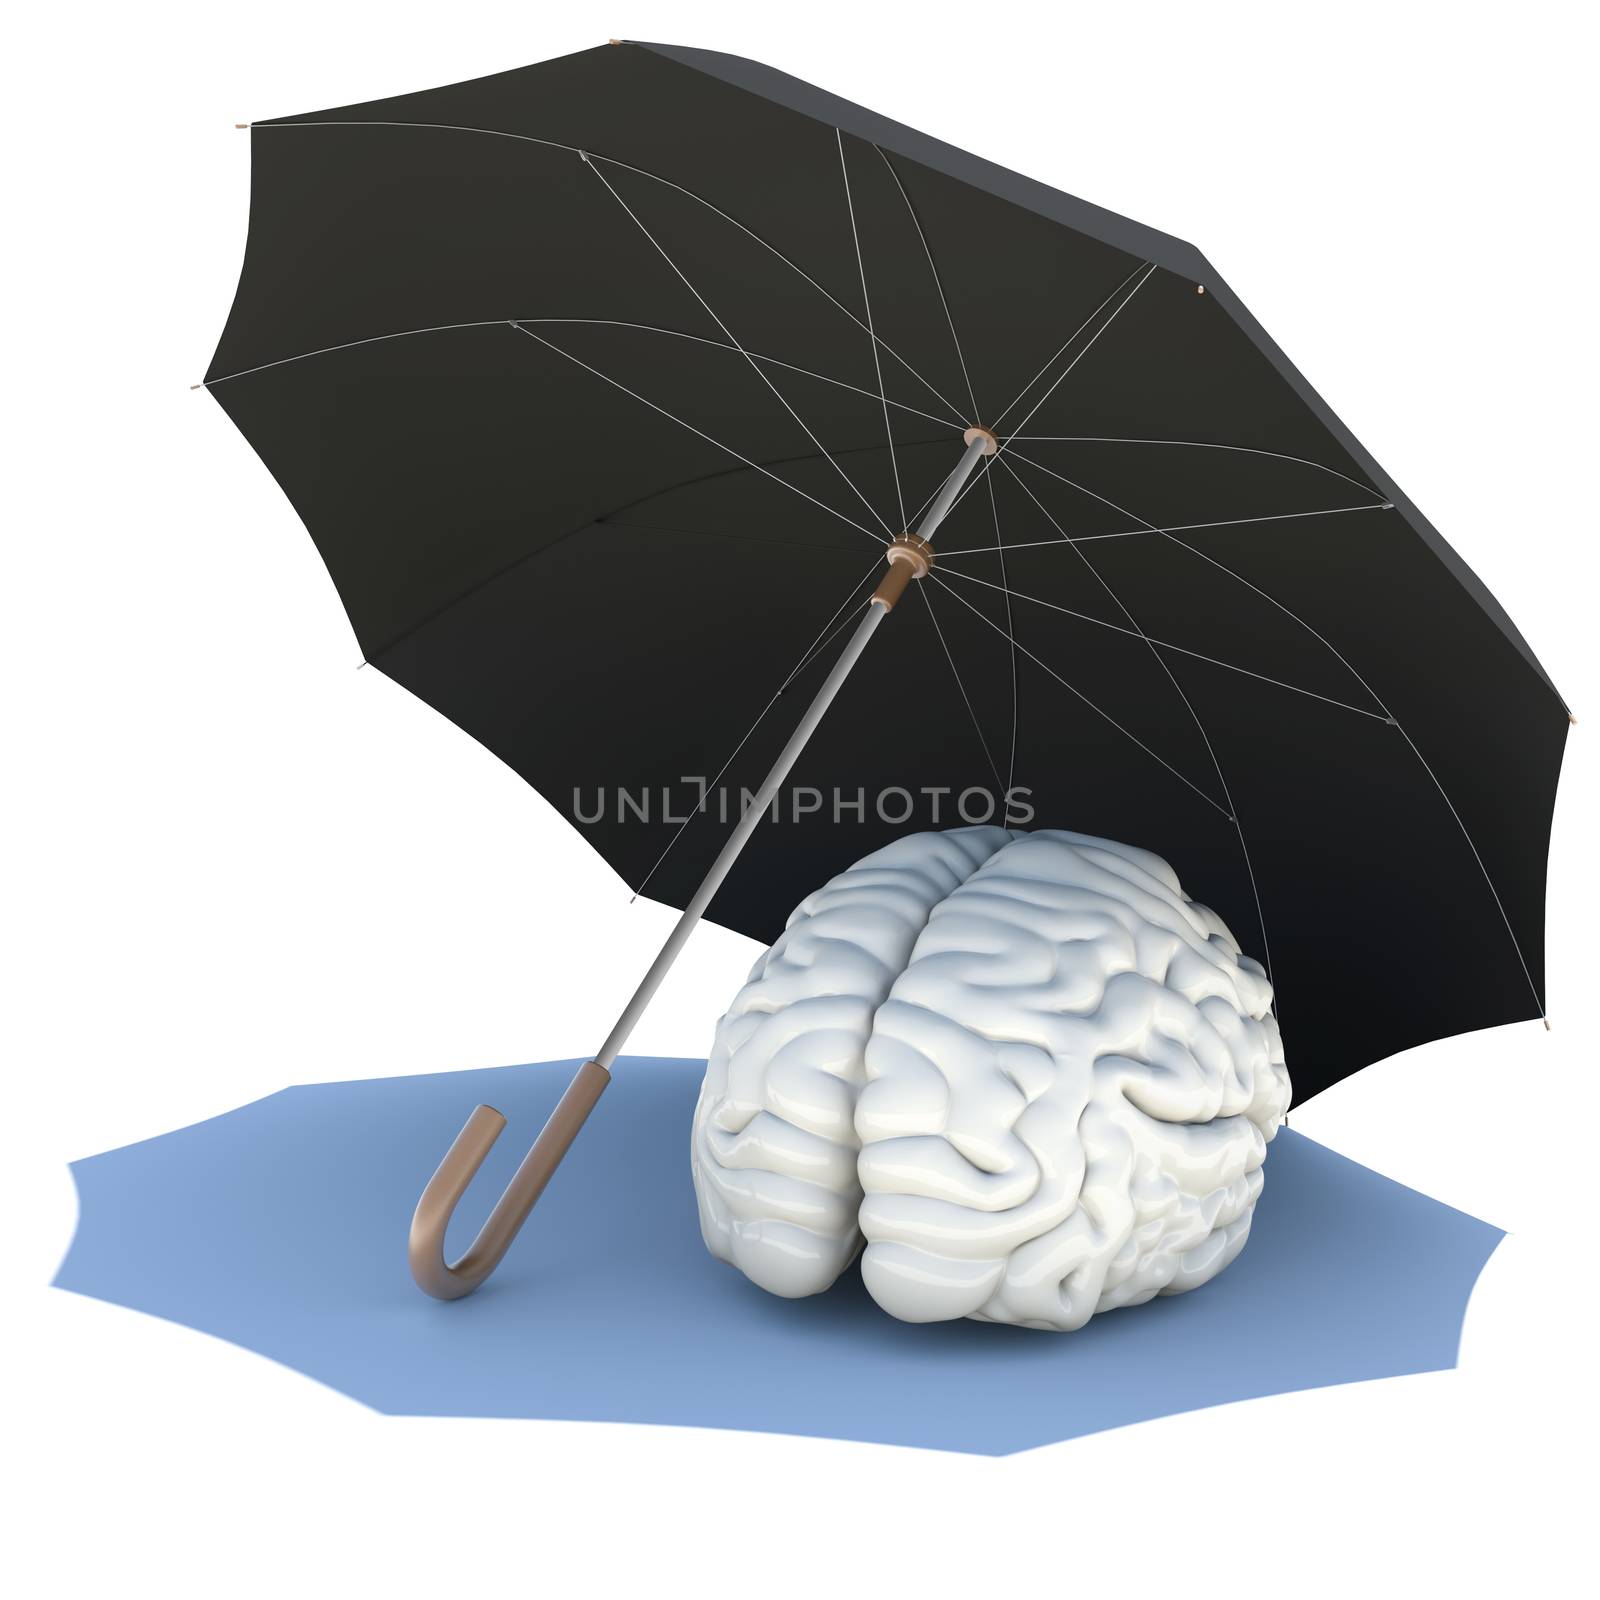 Umbrella covers the brain by cherezoff